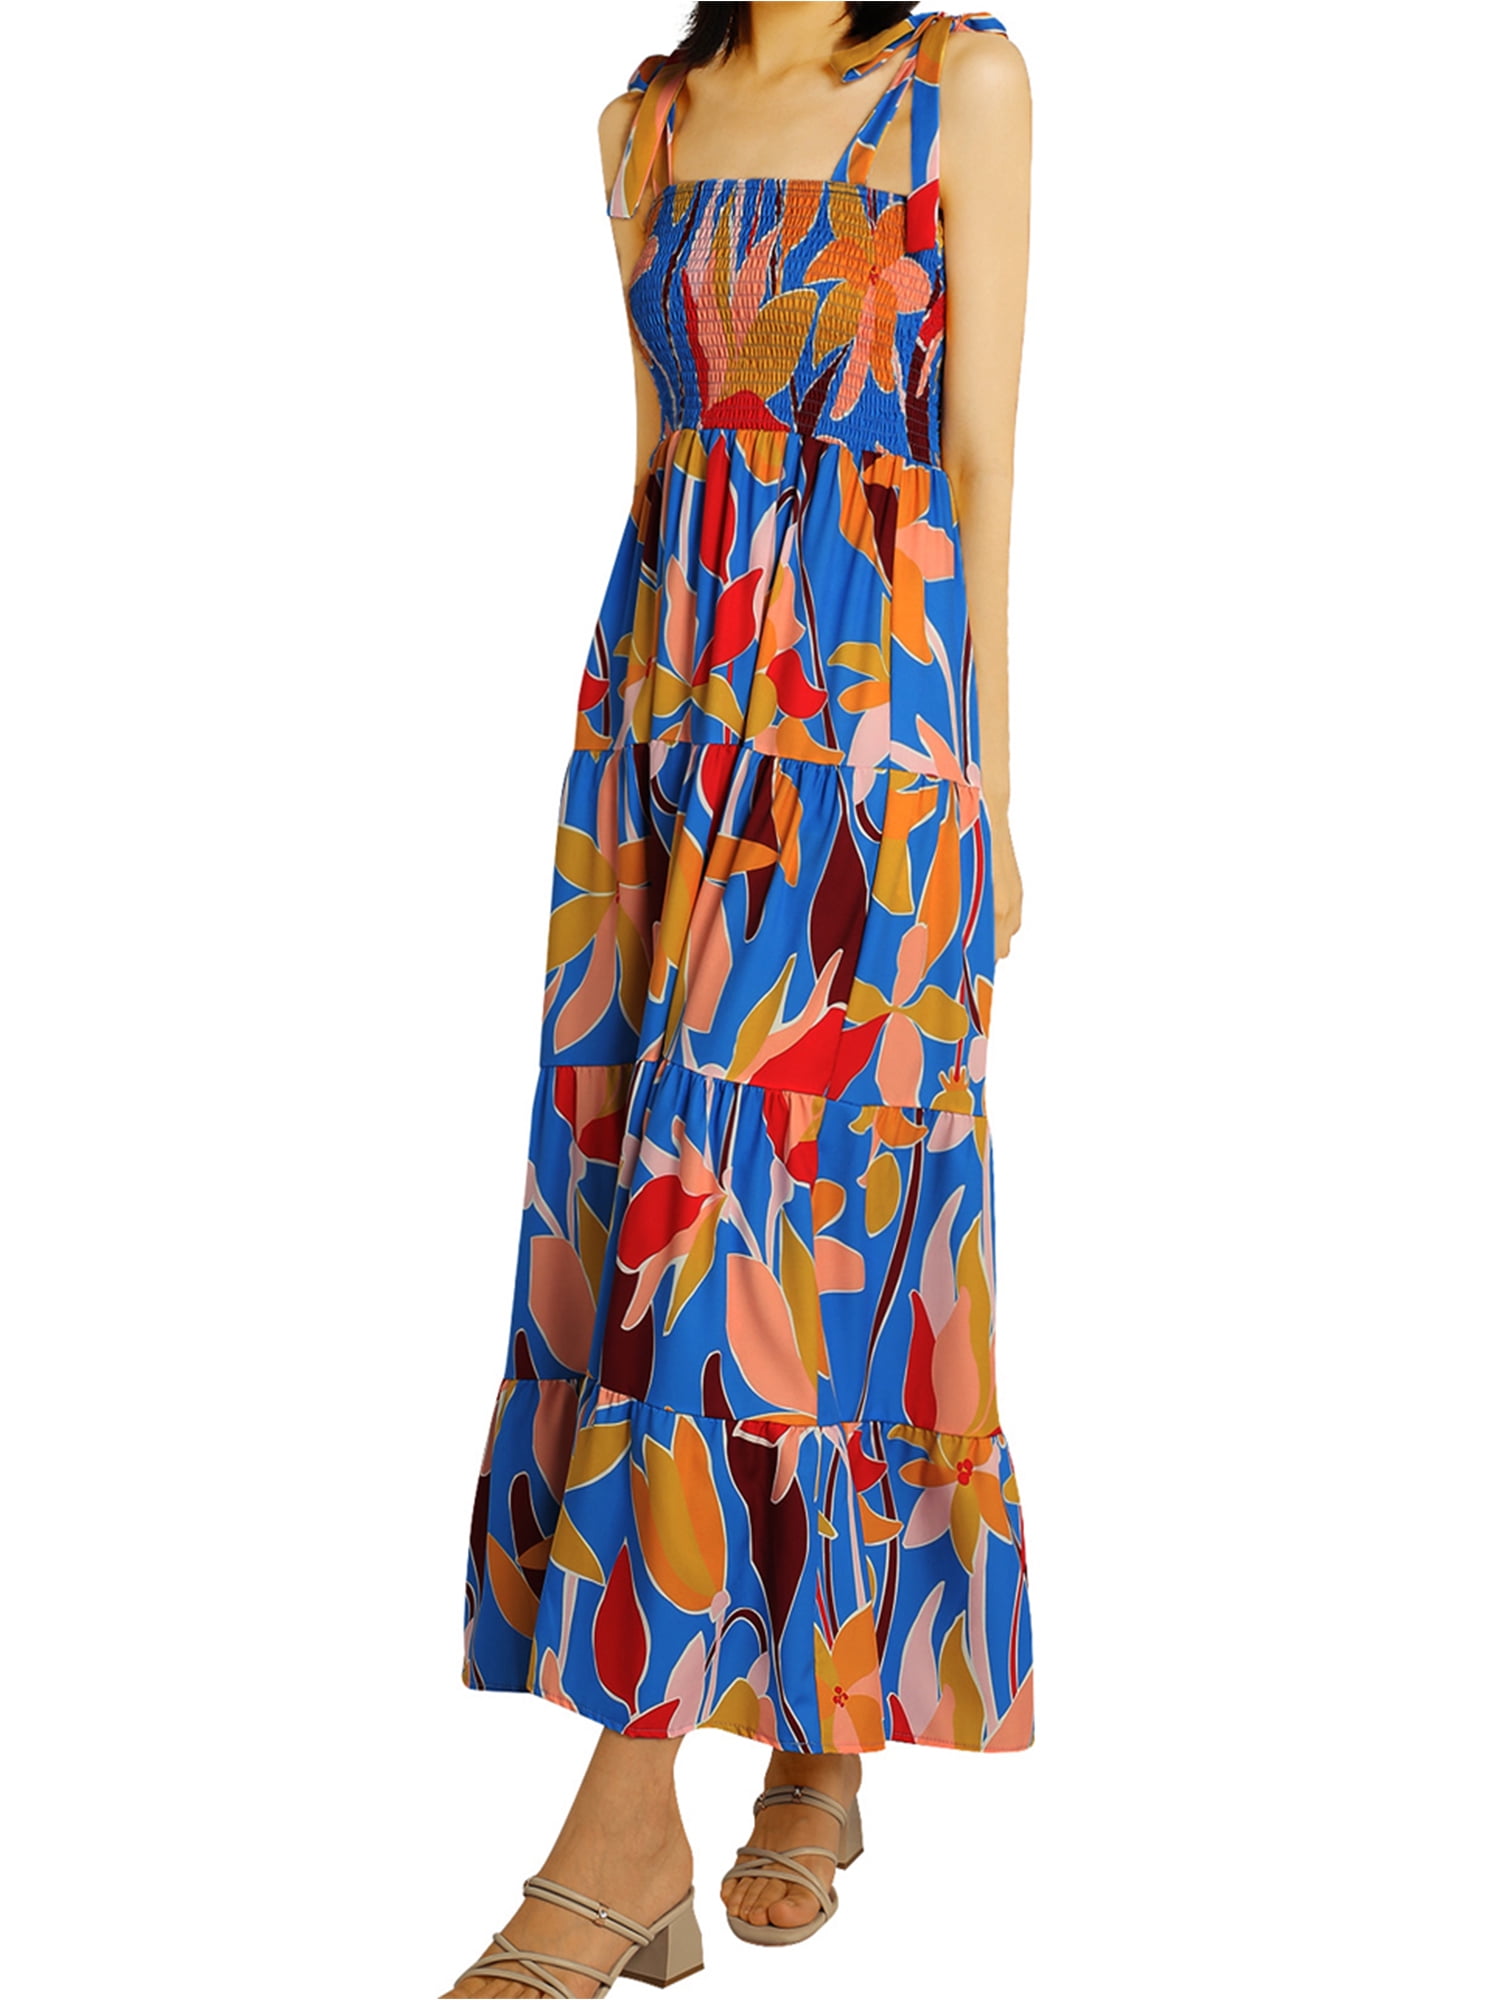 Bohe Flower Printed Slip Dress Summer Tie Up Boat Neck Maxi Dress S-XL -